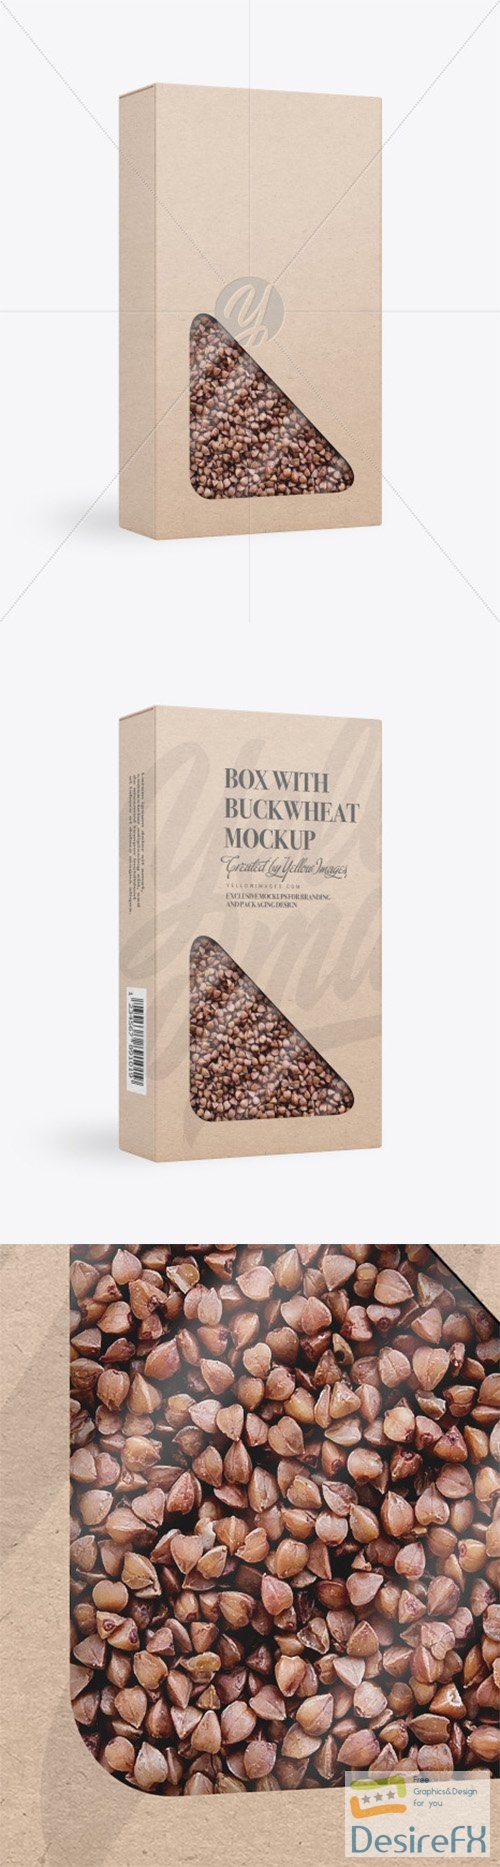 Kraft Paper Box with Buckwheat Mockup 78414 TIF